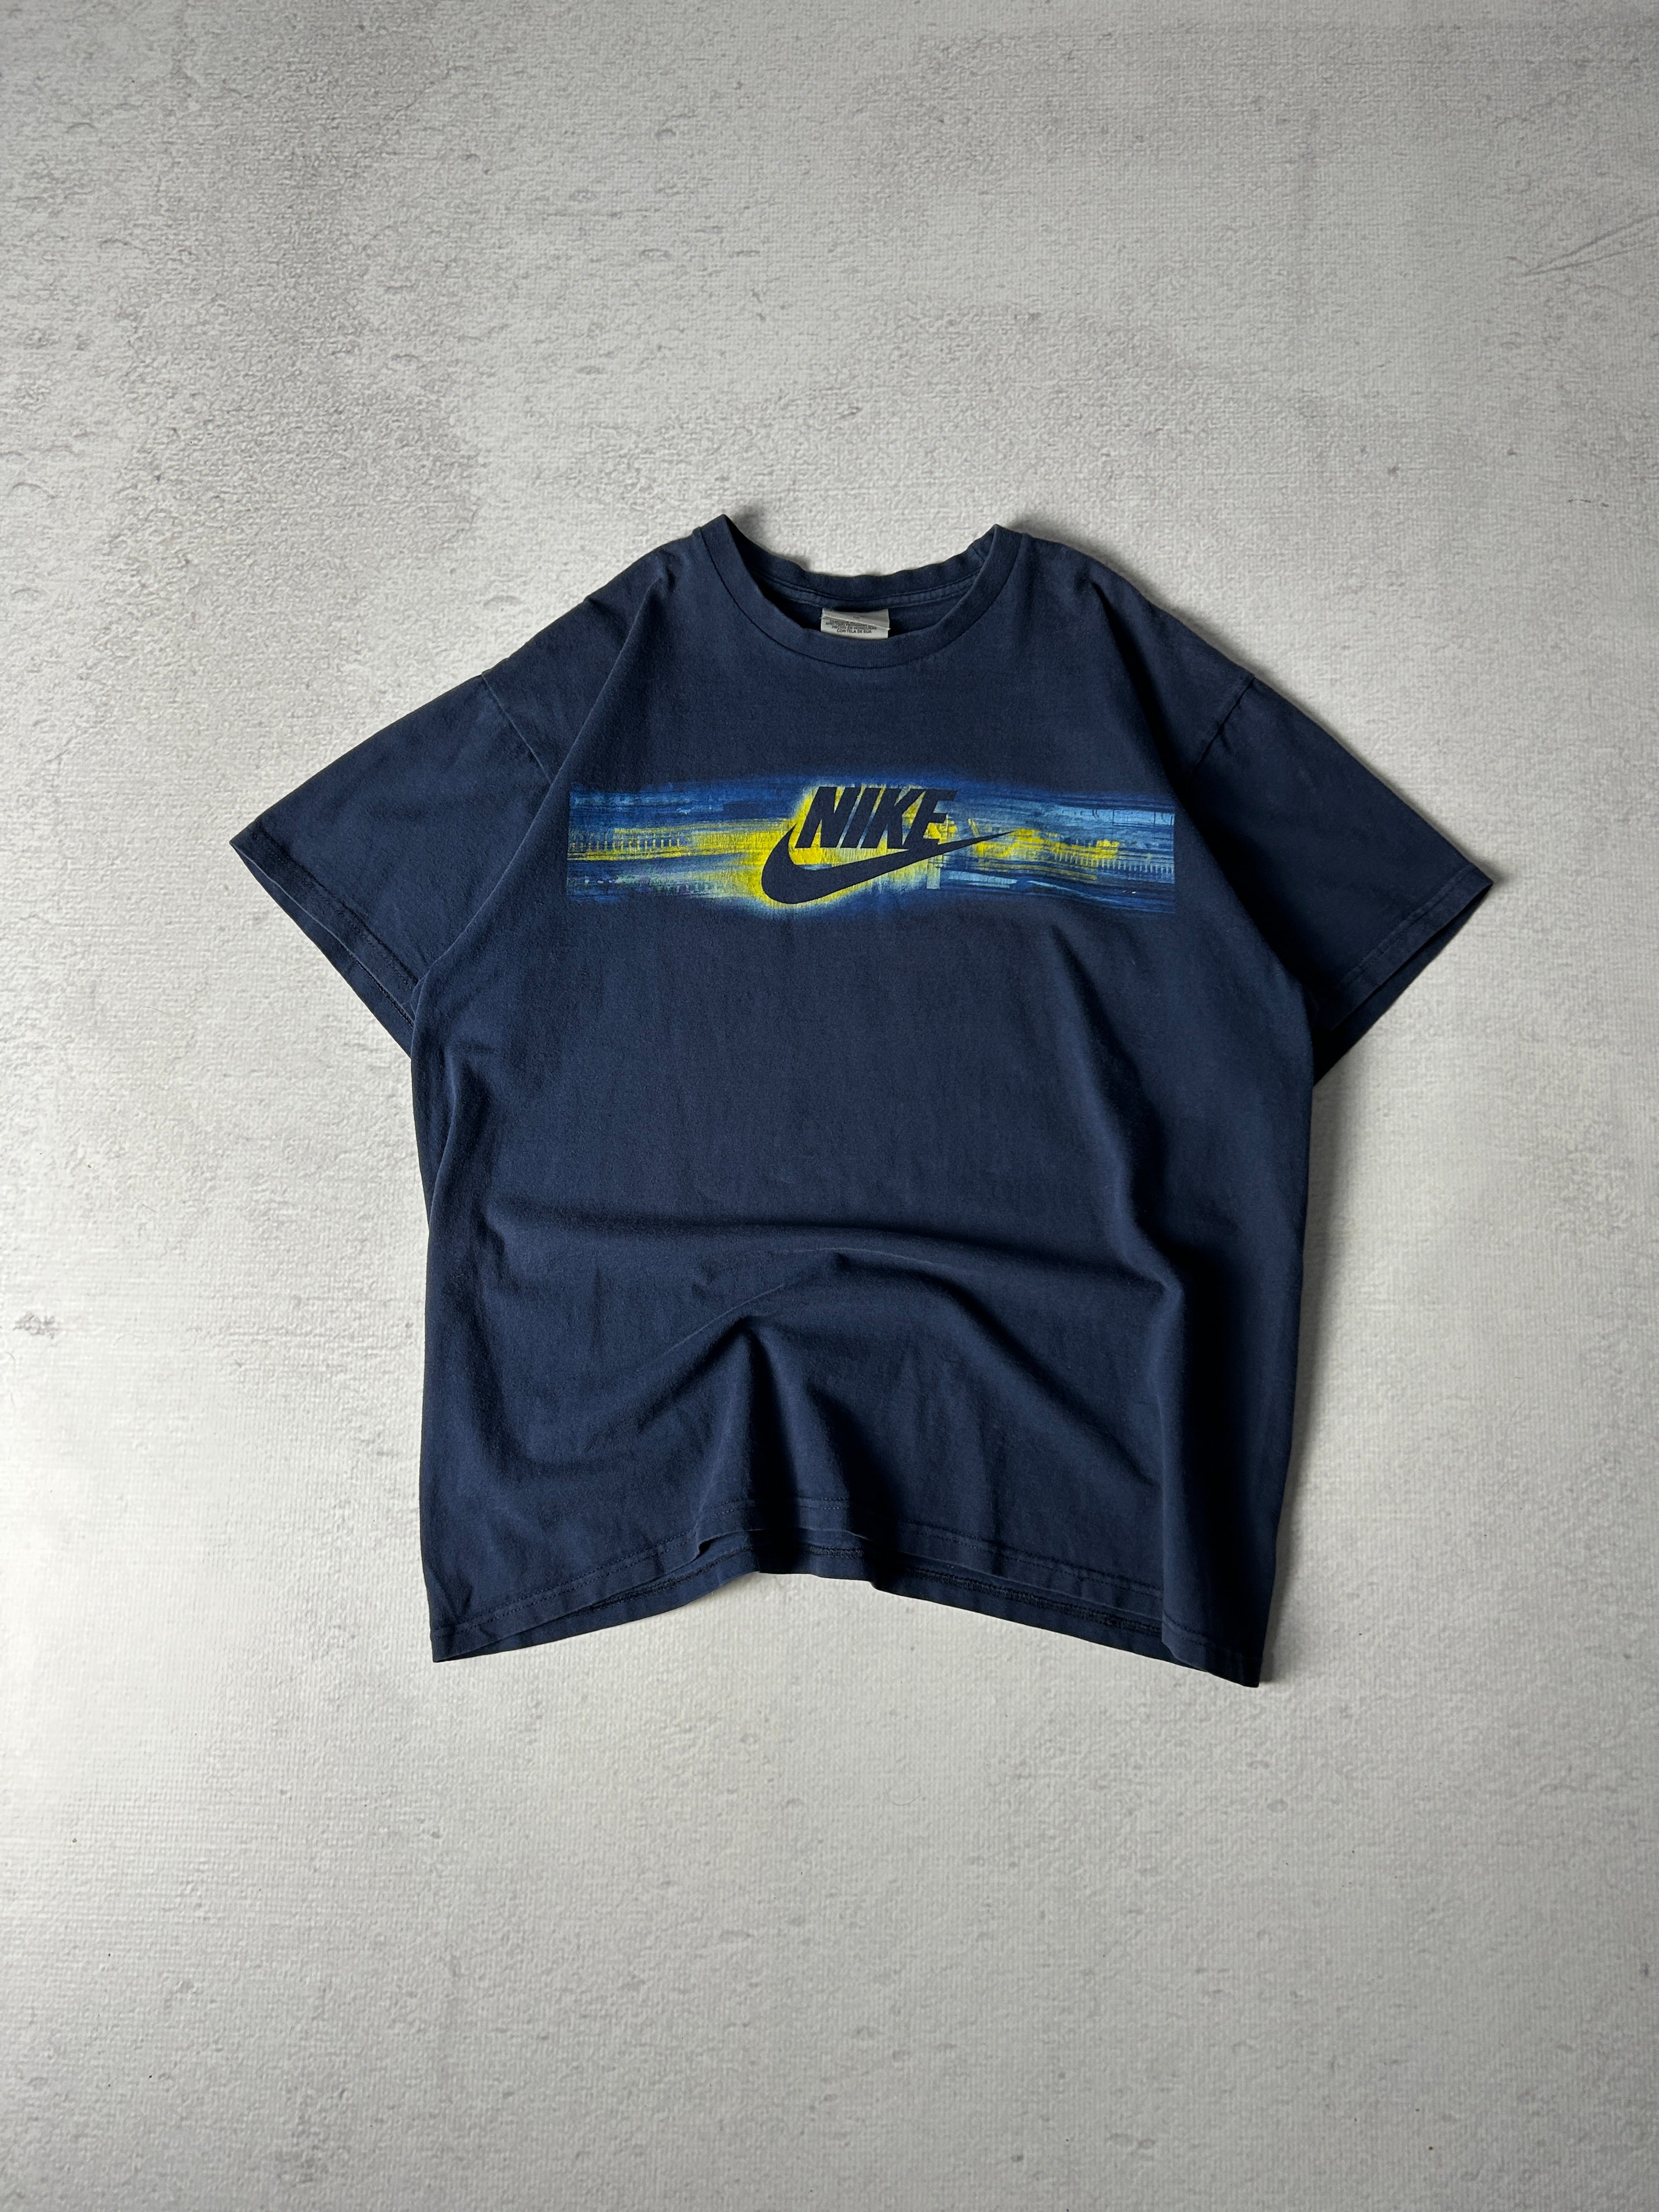 Vintage Nike T-Shirt - Men's Medium